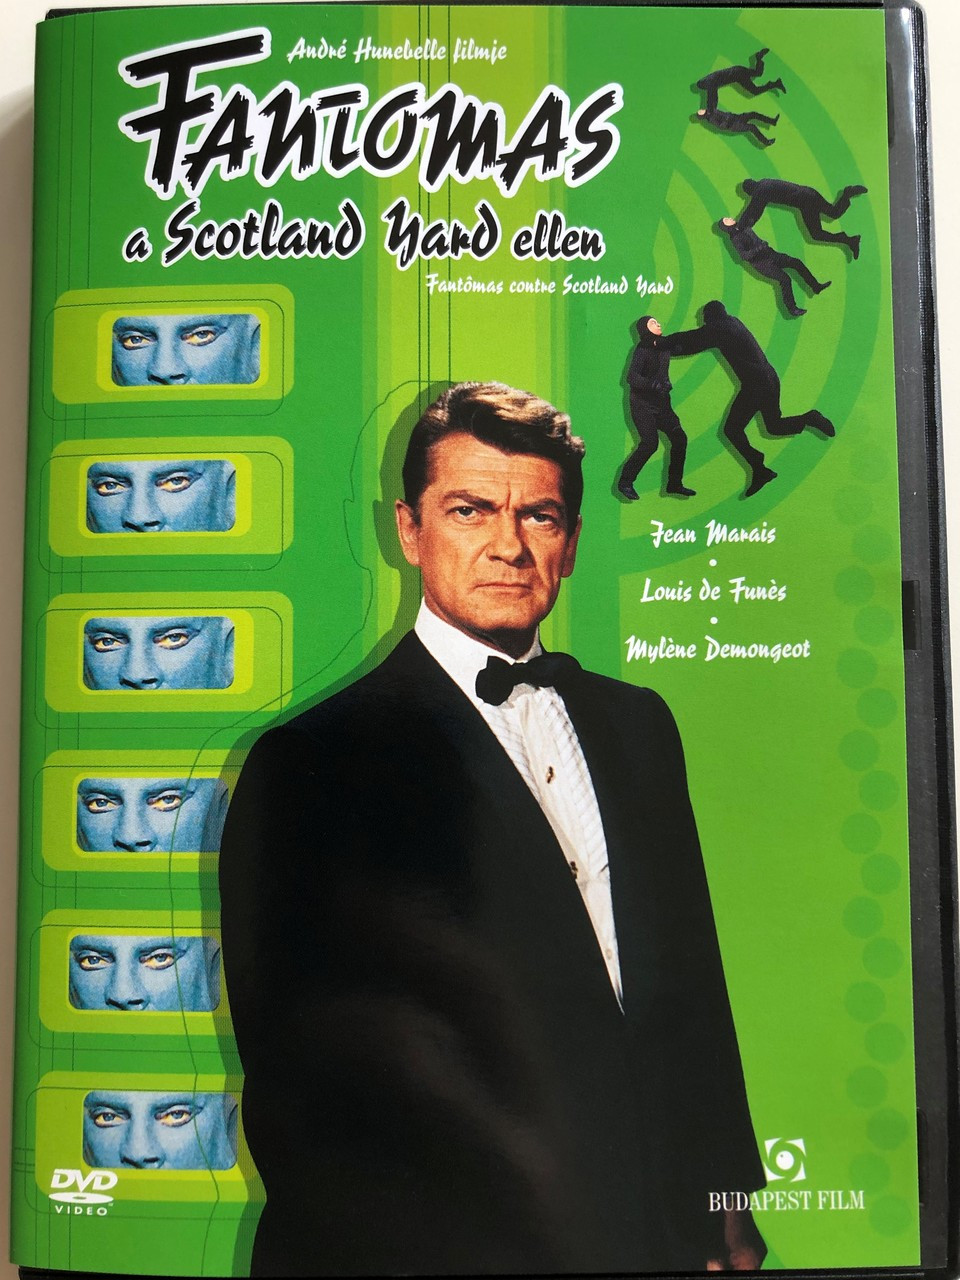 Fantômas contre Scotland Yard DVD 1967 Fantomas a Scotland Yard ellen /  Directed by André Hunebelle / Starring: Jean Marais, Louis de Funès, Mylène  Demongeot - bibleinmylanguage